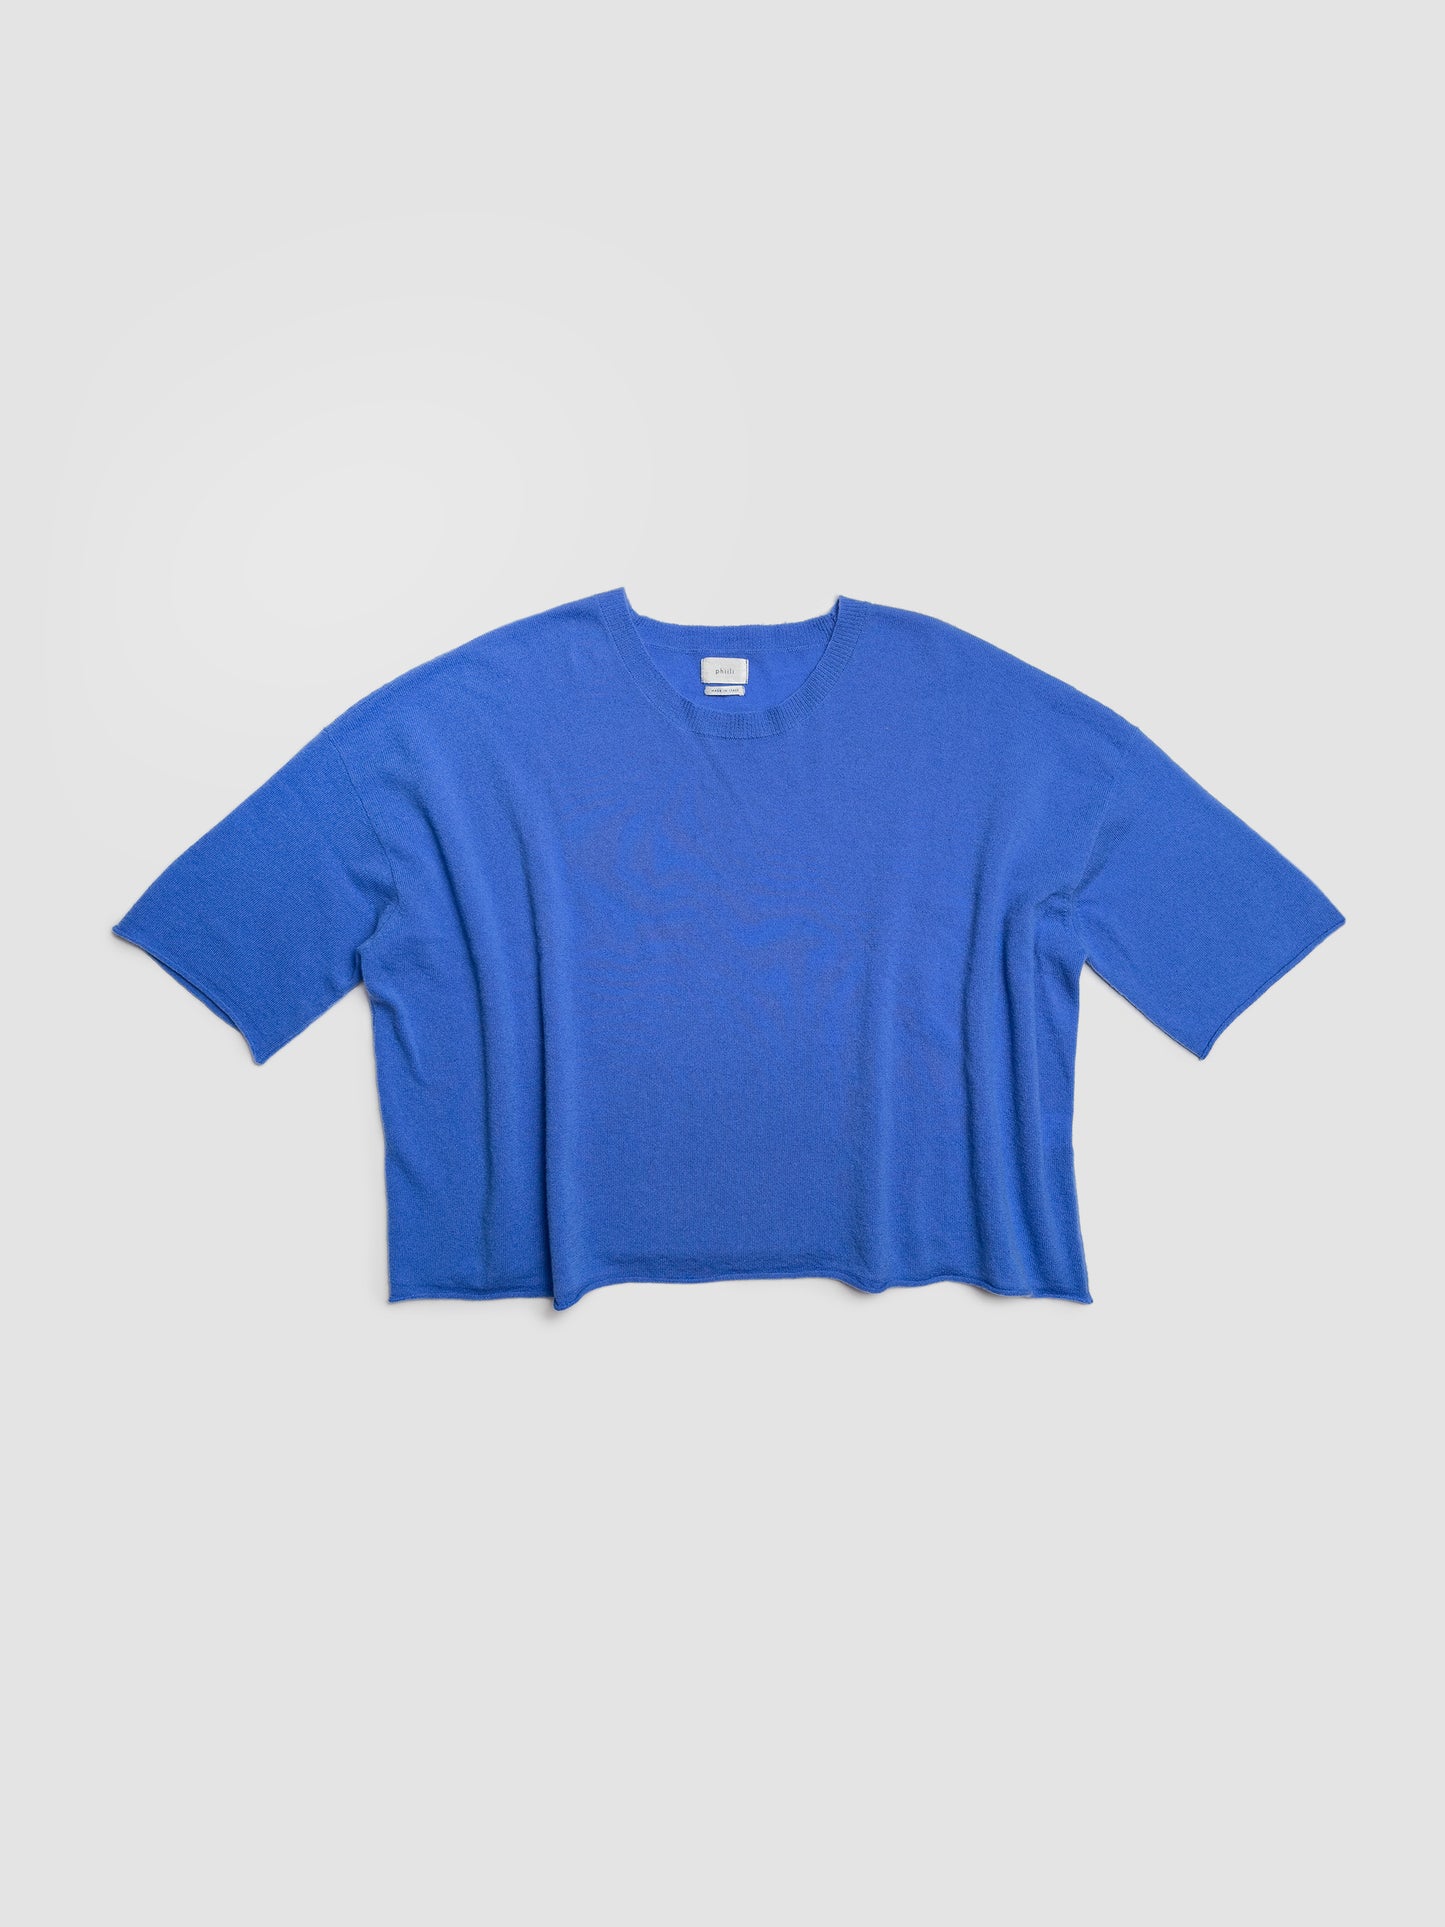 Seville Sky Cashmere T-Shirt